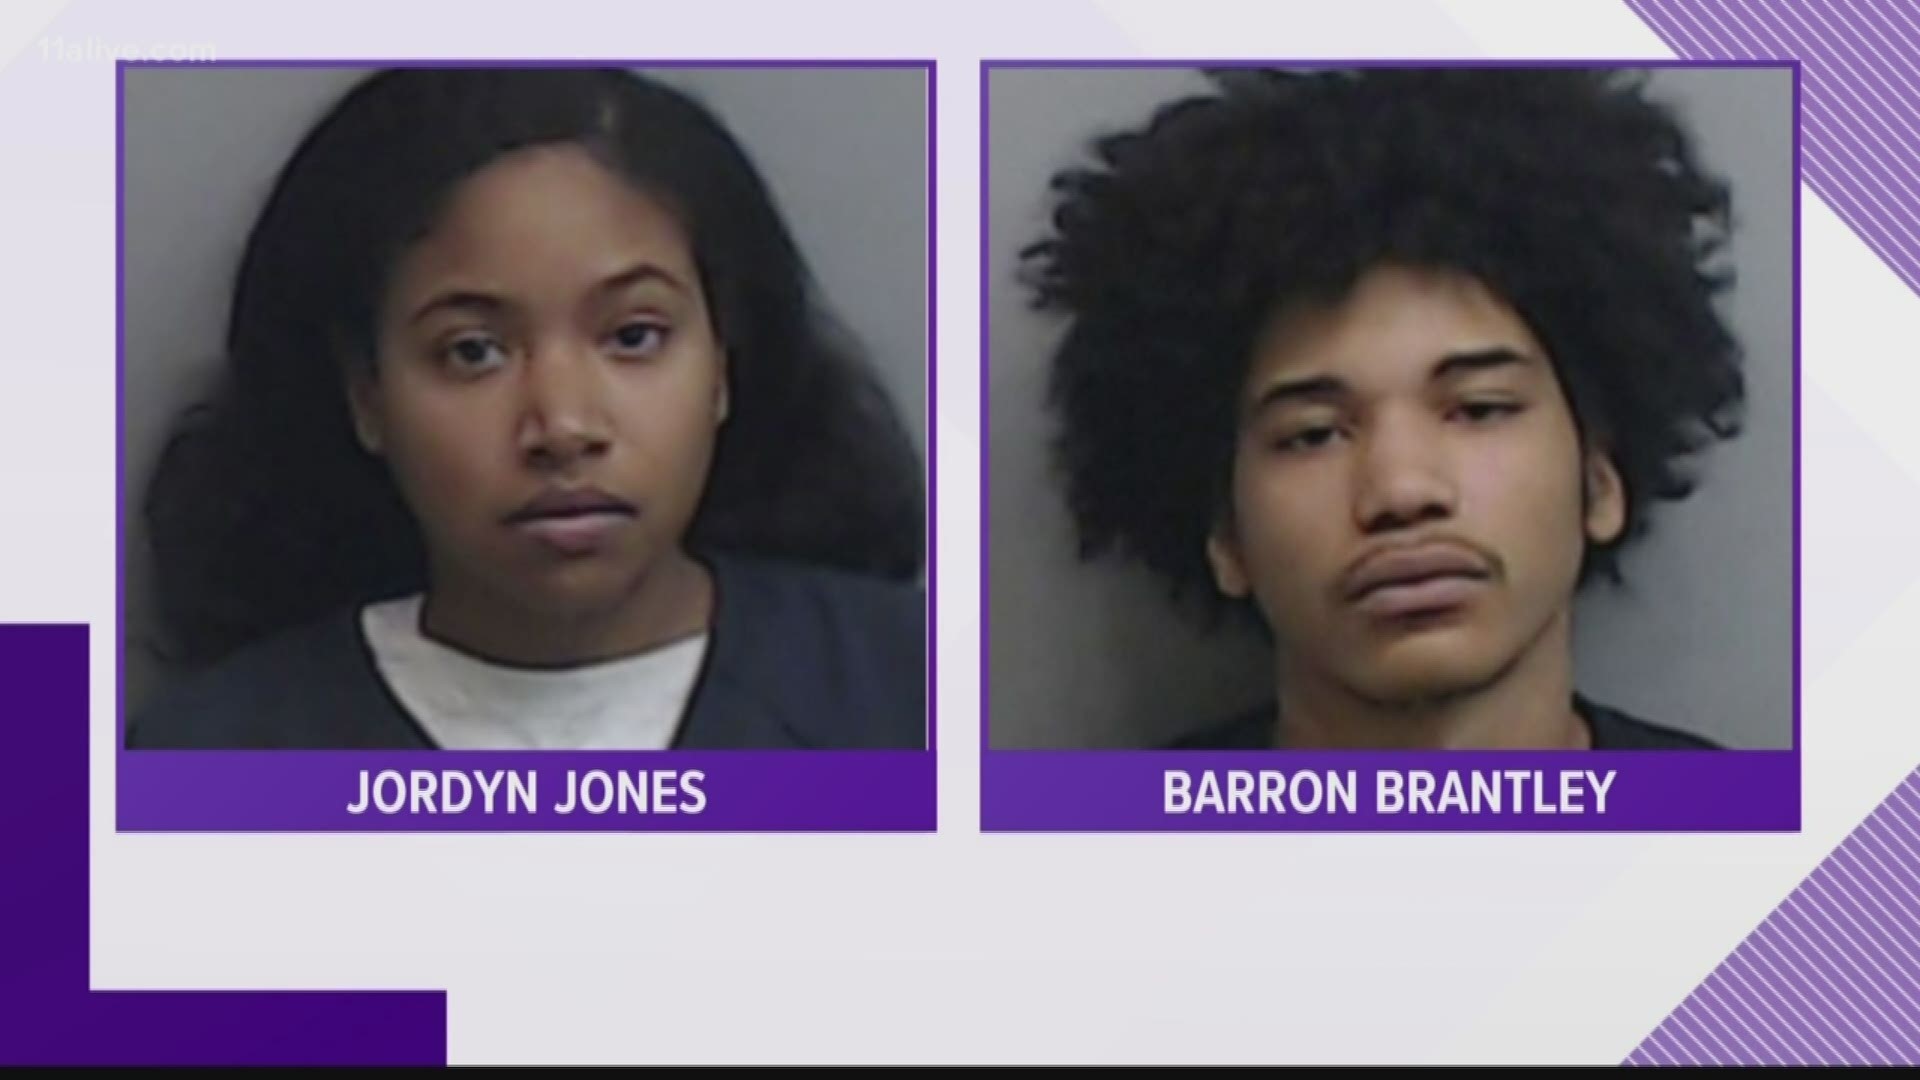 Jordyn Jones and her boyfriend, Barron Brantley - face multiple charges in the murder